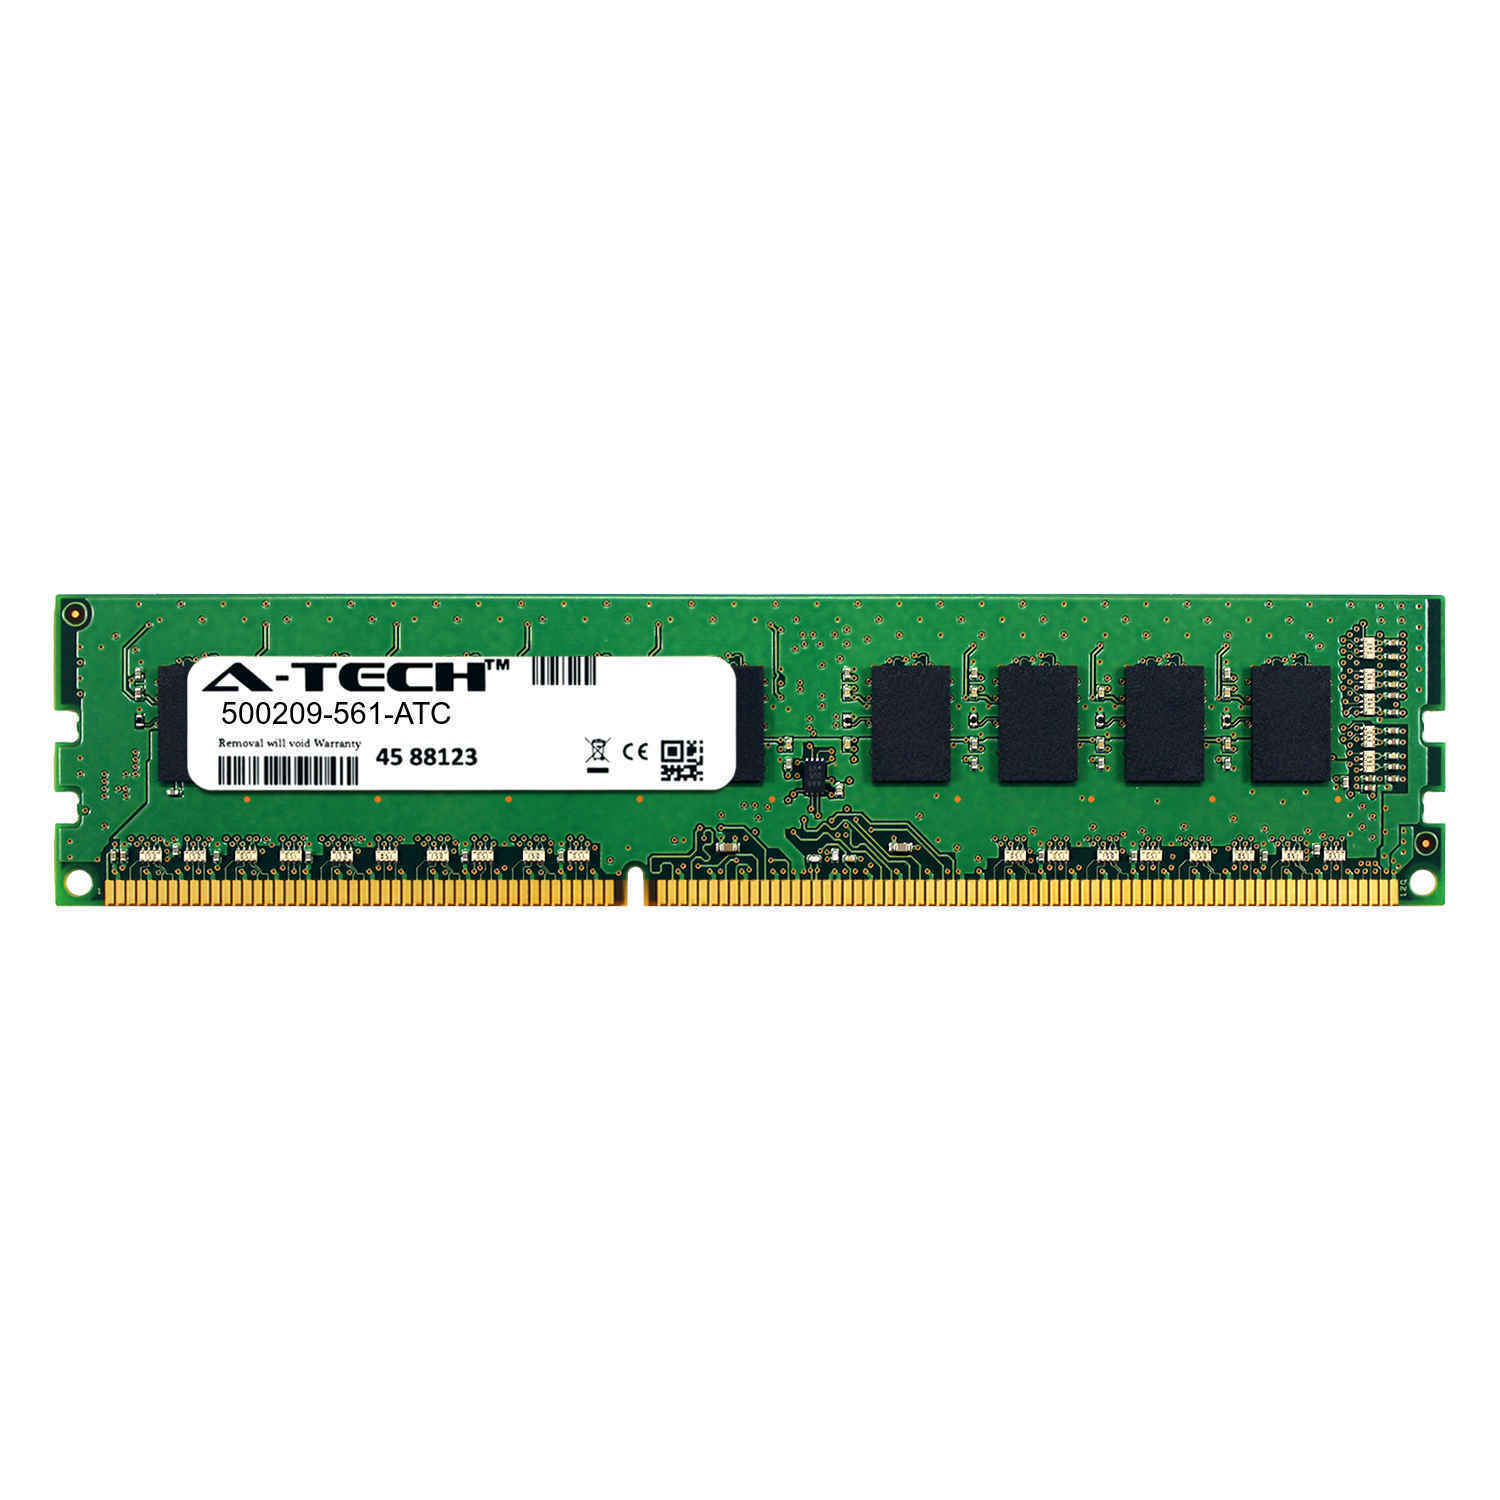 2GB DDR3 PC3-10600E ECC UDIMM (HP 500209-561 Equivalent) Server Memory RAM